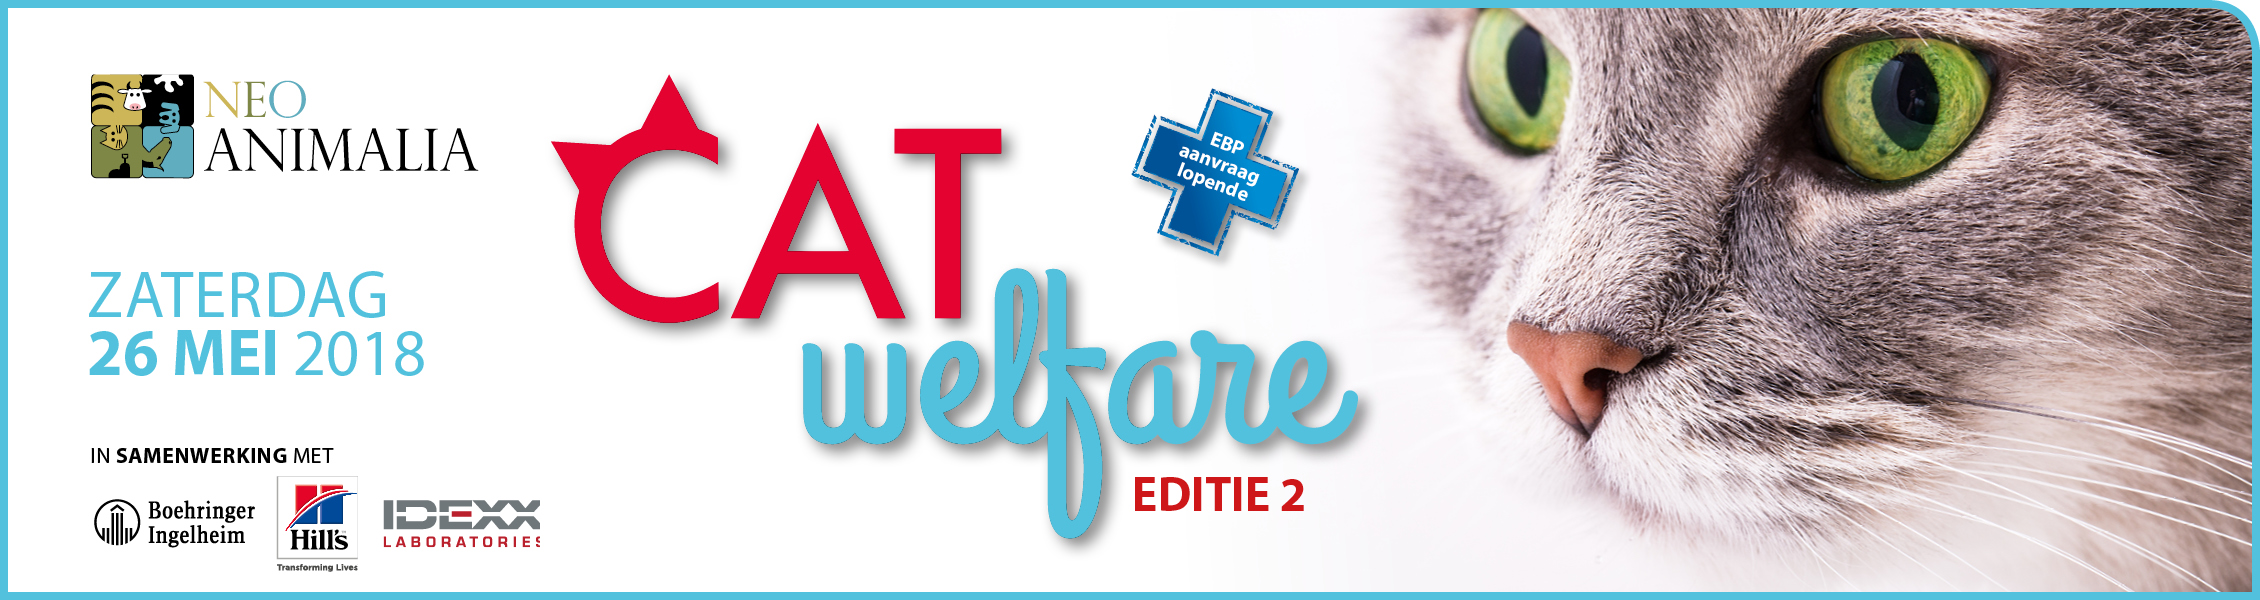 CAT Welfare Editie 2 NL